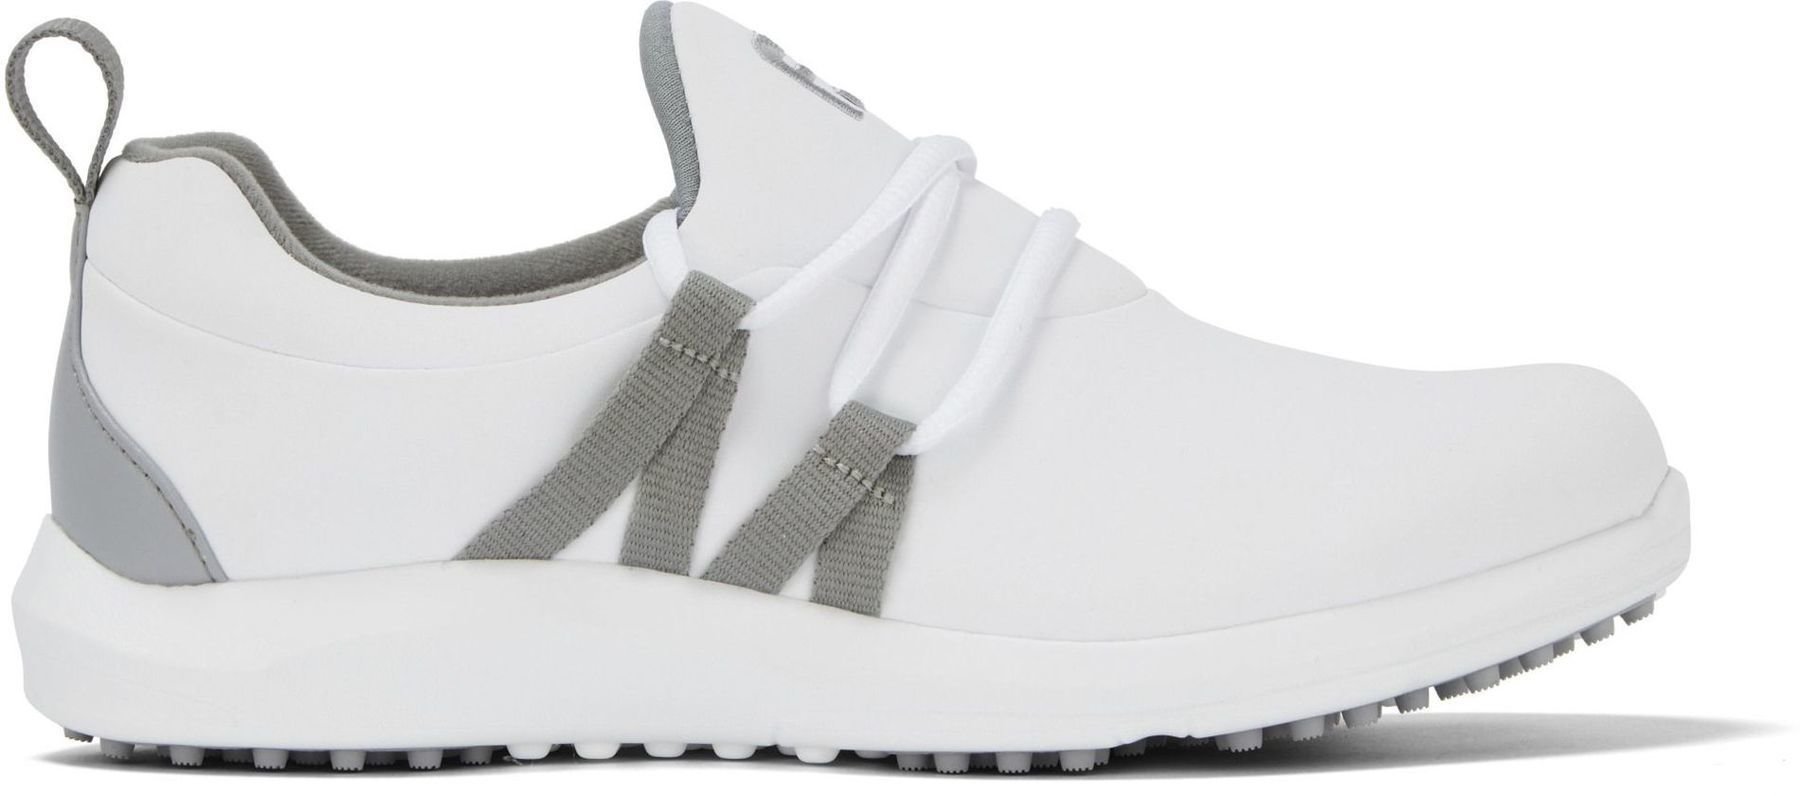 Chaussures de golf pour femmes Footjoy Leisure Slip On White/Grey 42